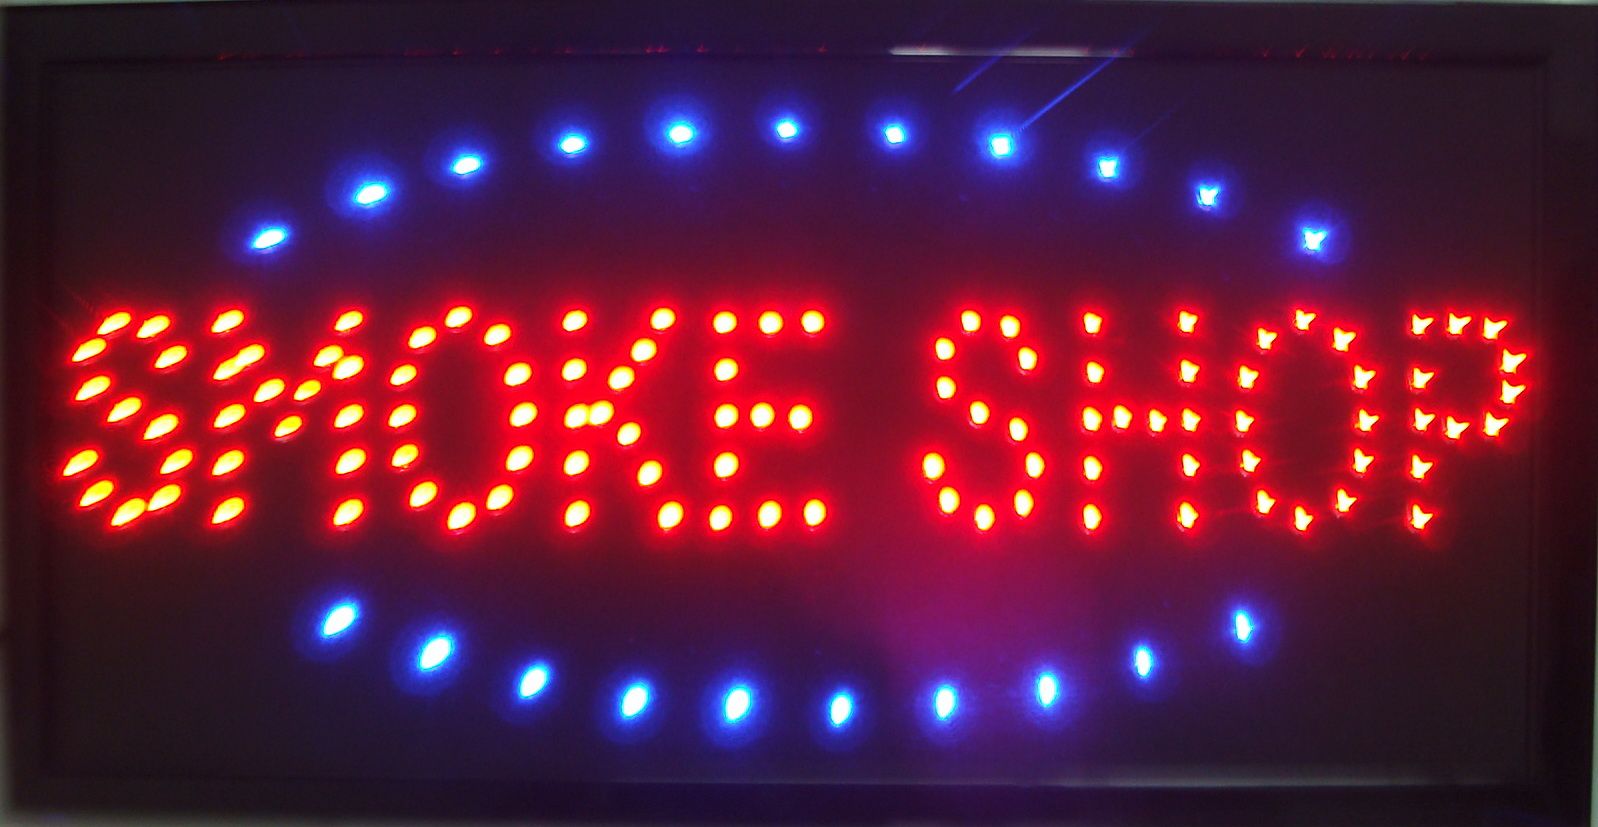 Discount Hot Sale Customized Led Smoke Shop Signs Neon Lights Plastic PVC Frame Display Semi Size 48cm*25cm Top LED Boards & Billboards Online Shop | DHgate.Com